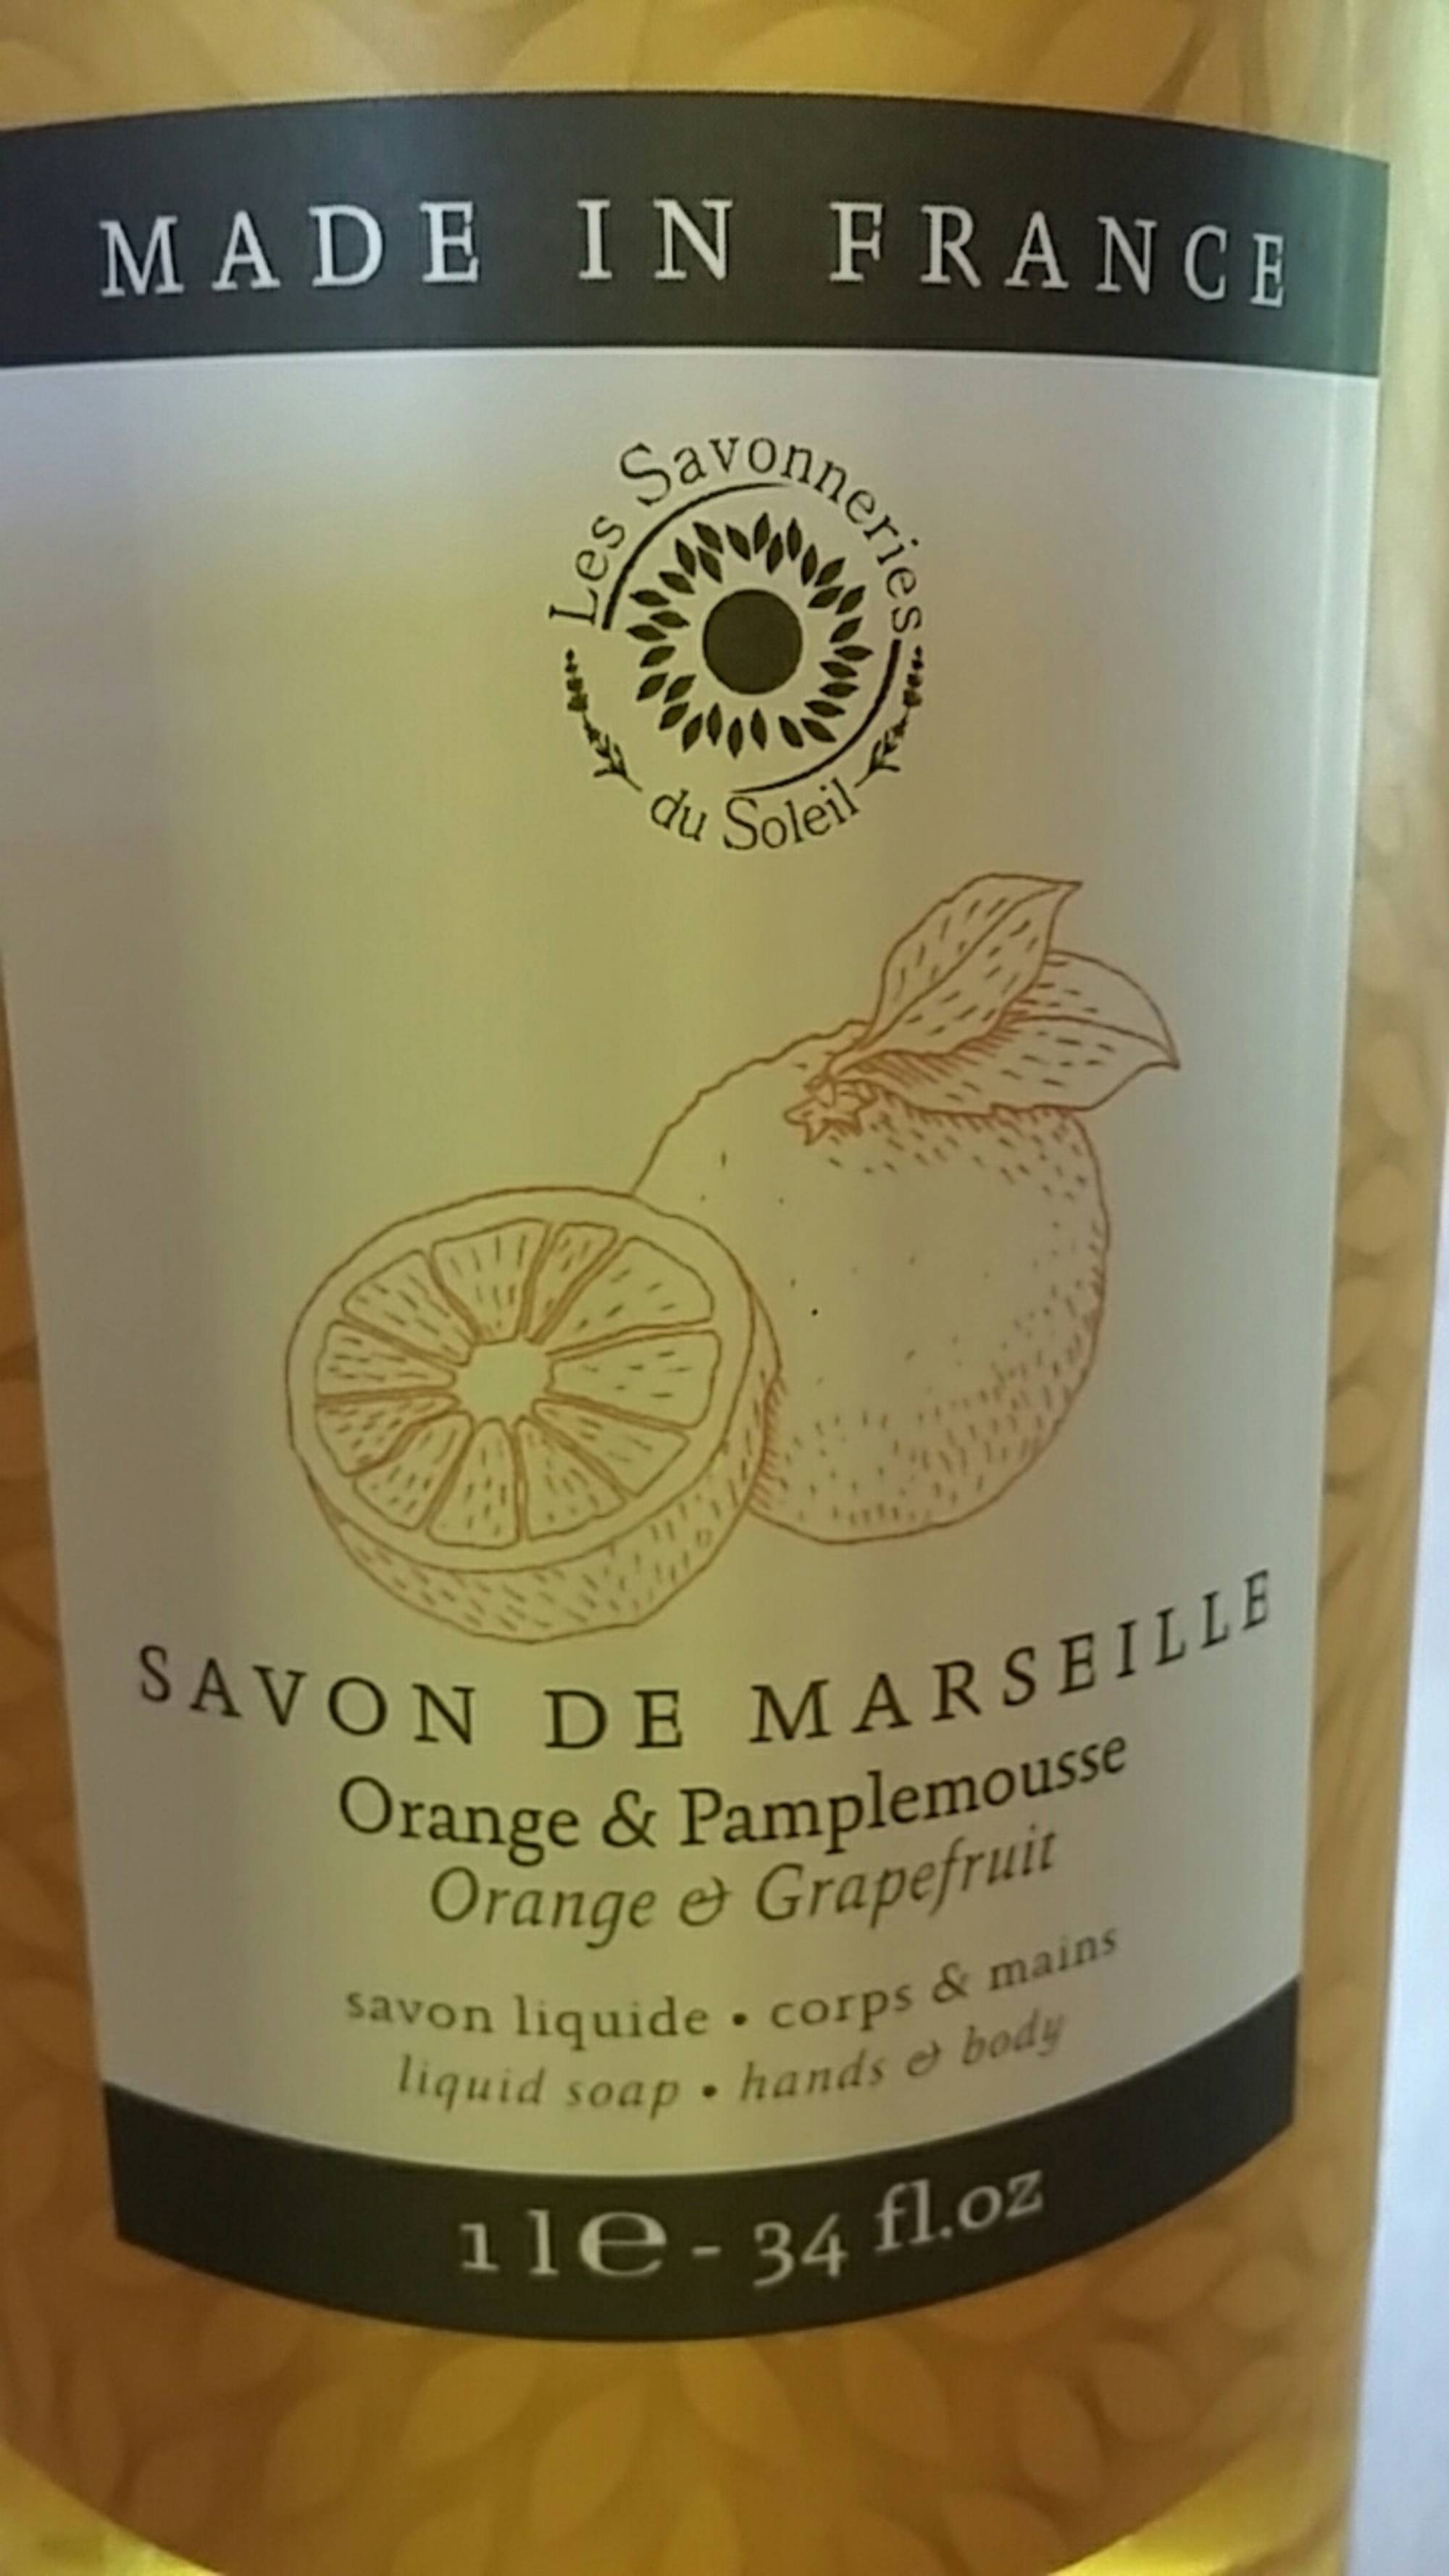 LES SAVONNERIES DU SOLEIL - Savon de Marseille Savon liquide